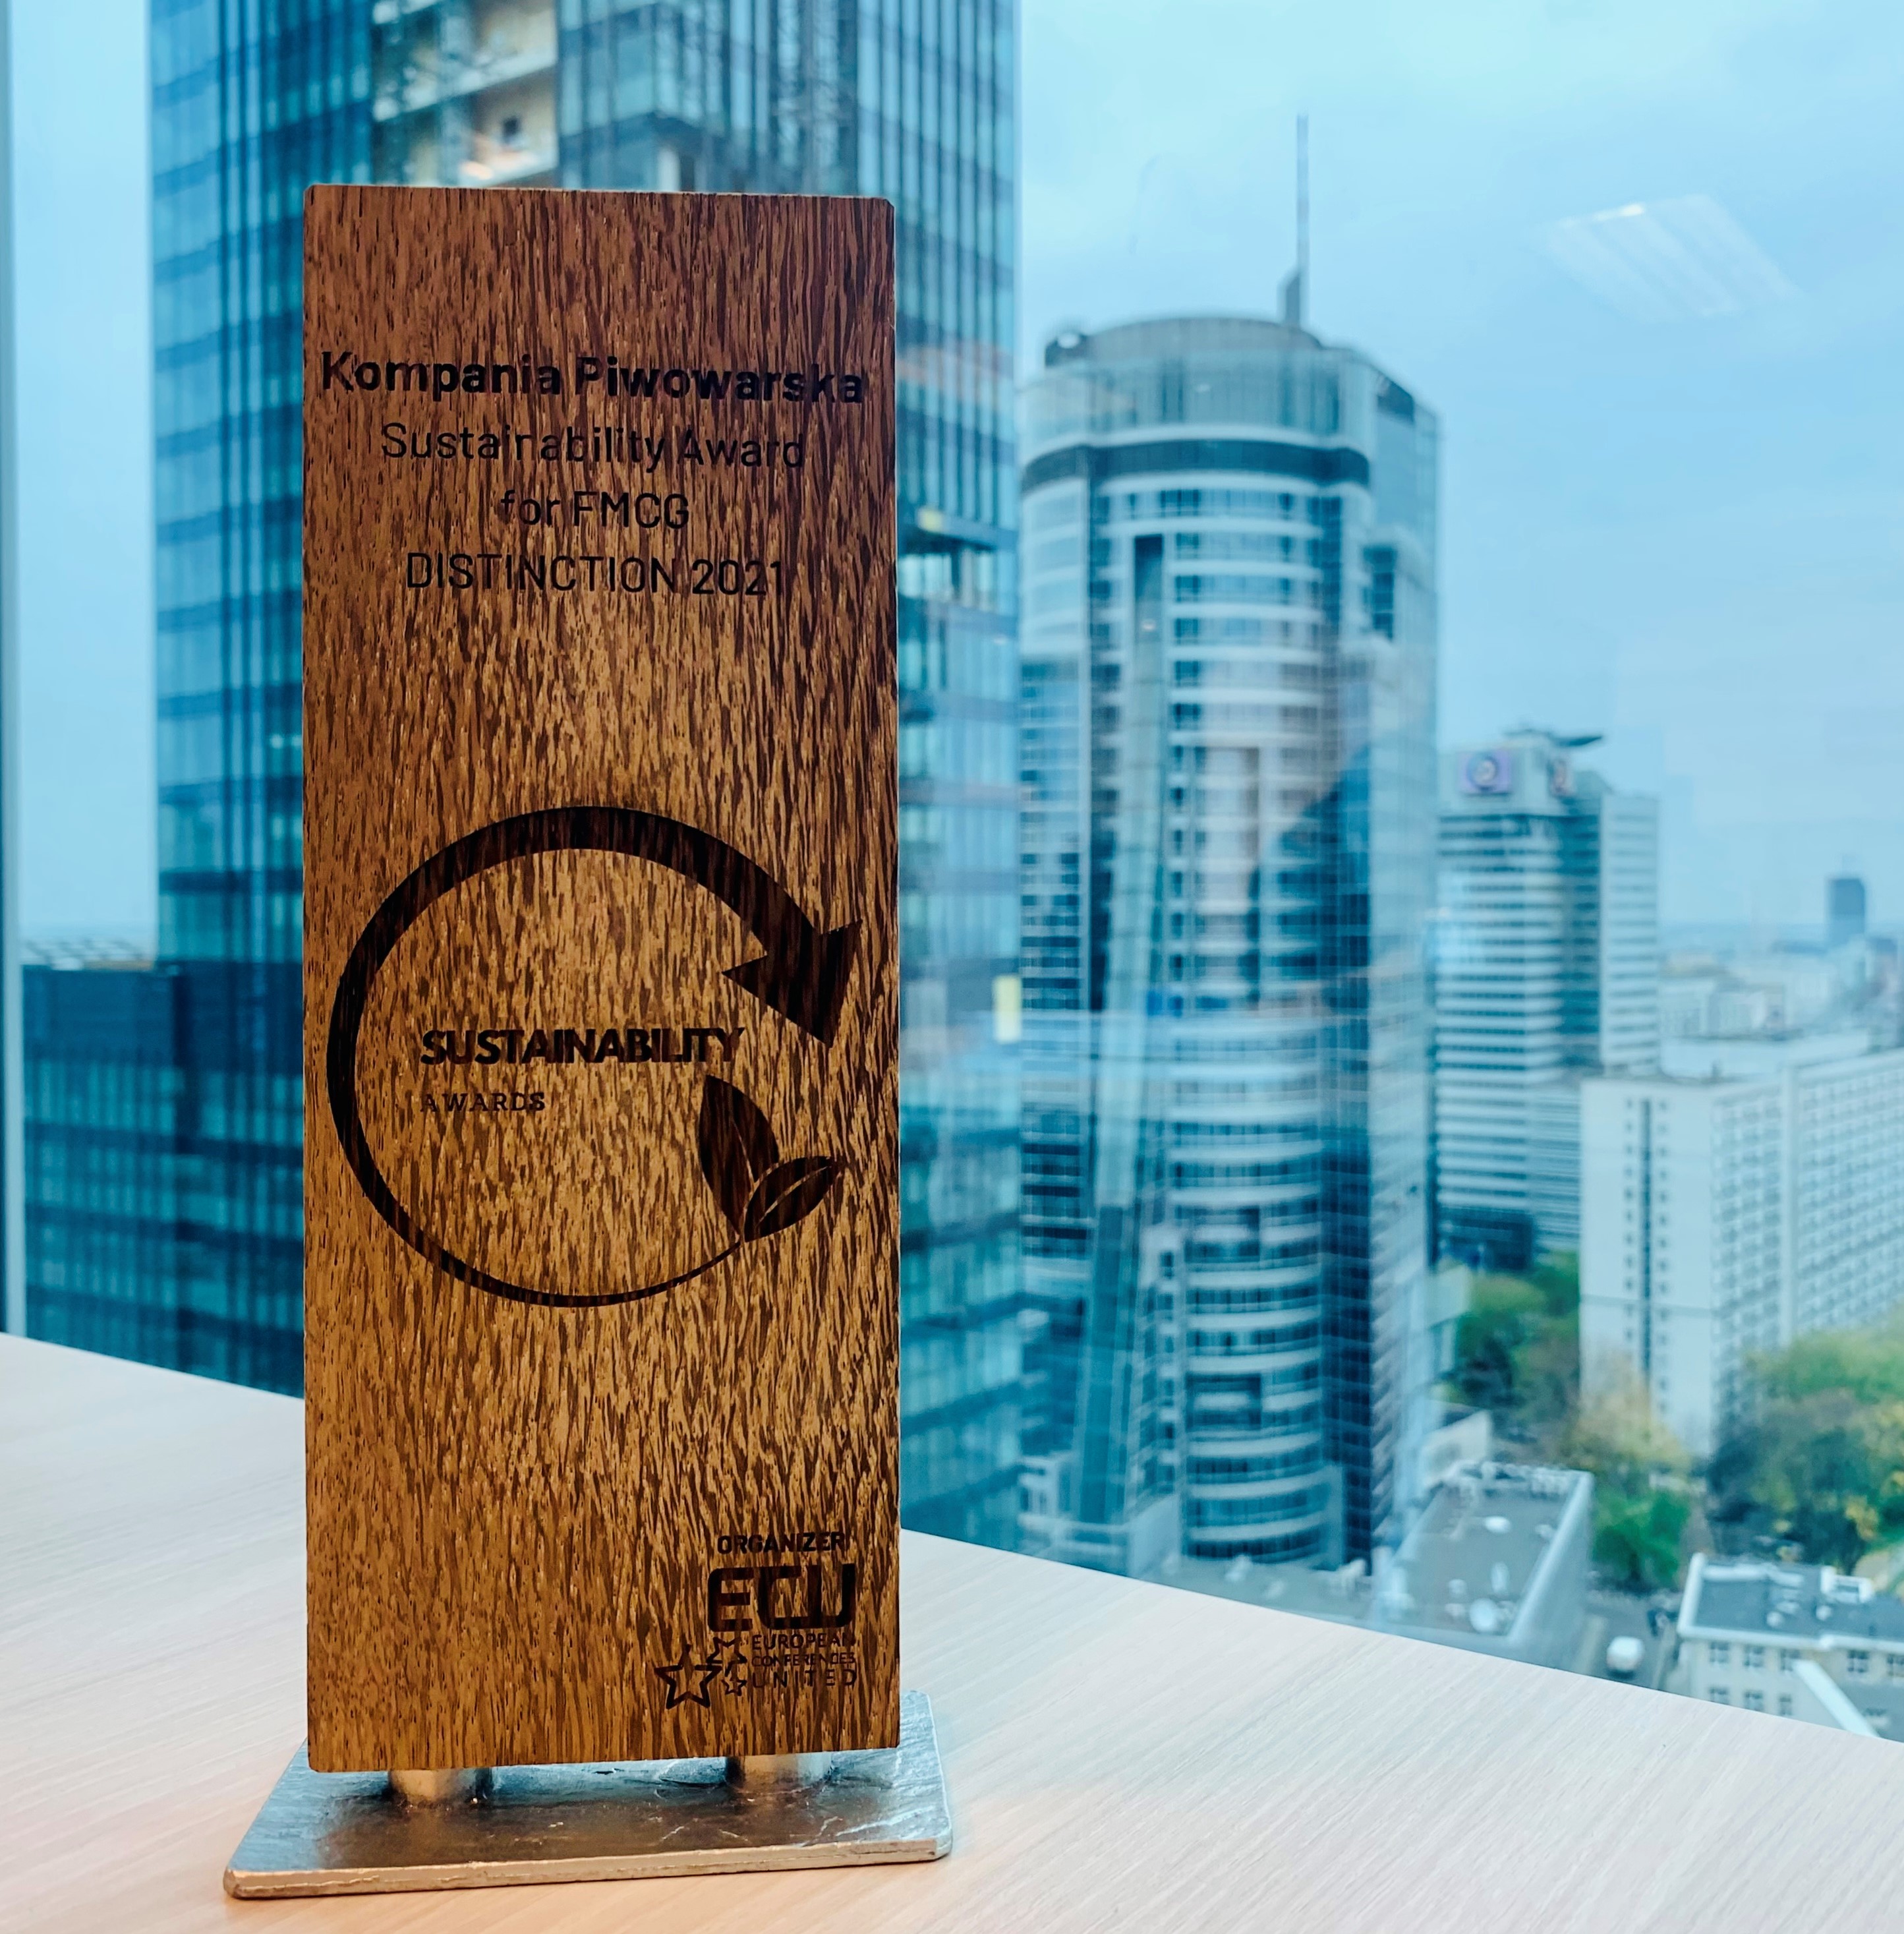 Kompania Piwowarska with a ECU Sustainability Award distinction for the campaign of Żubr’s Fund established by the Żubr brand